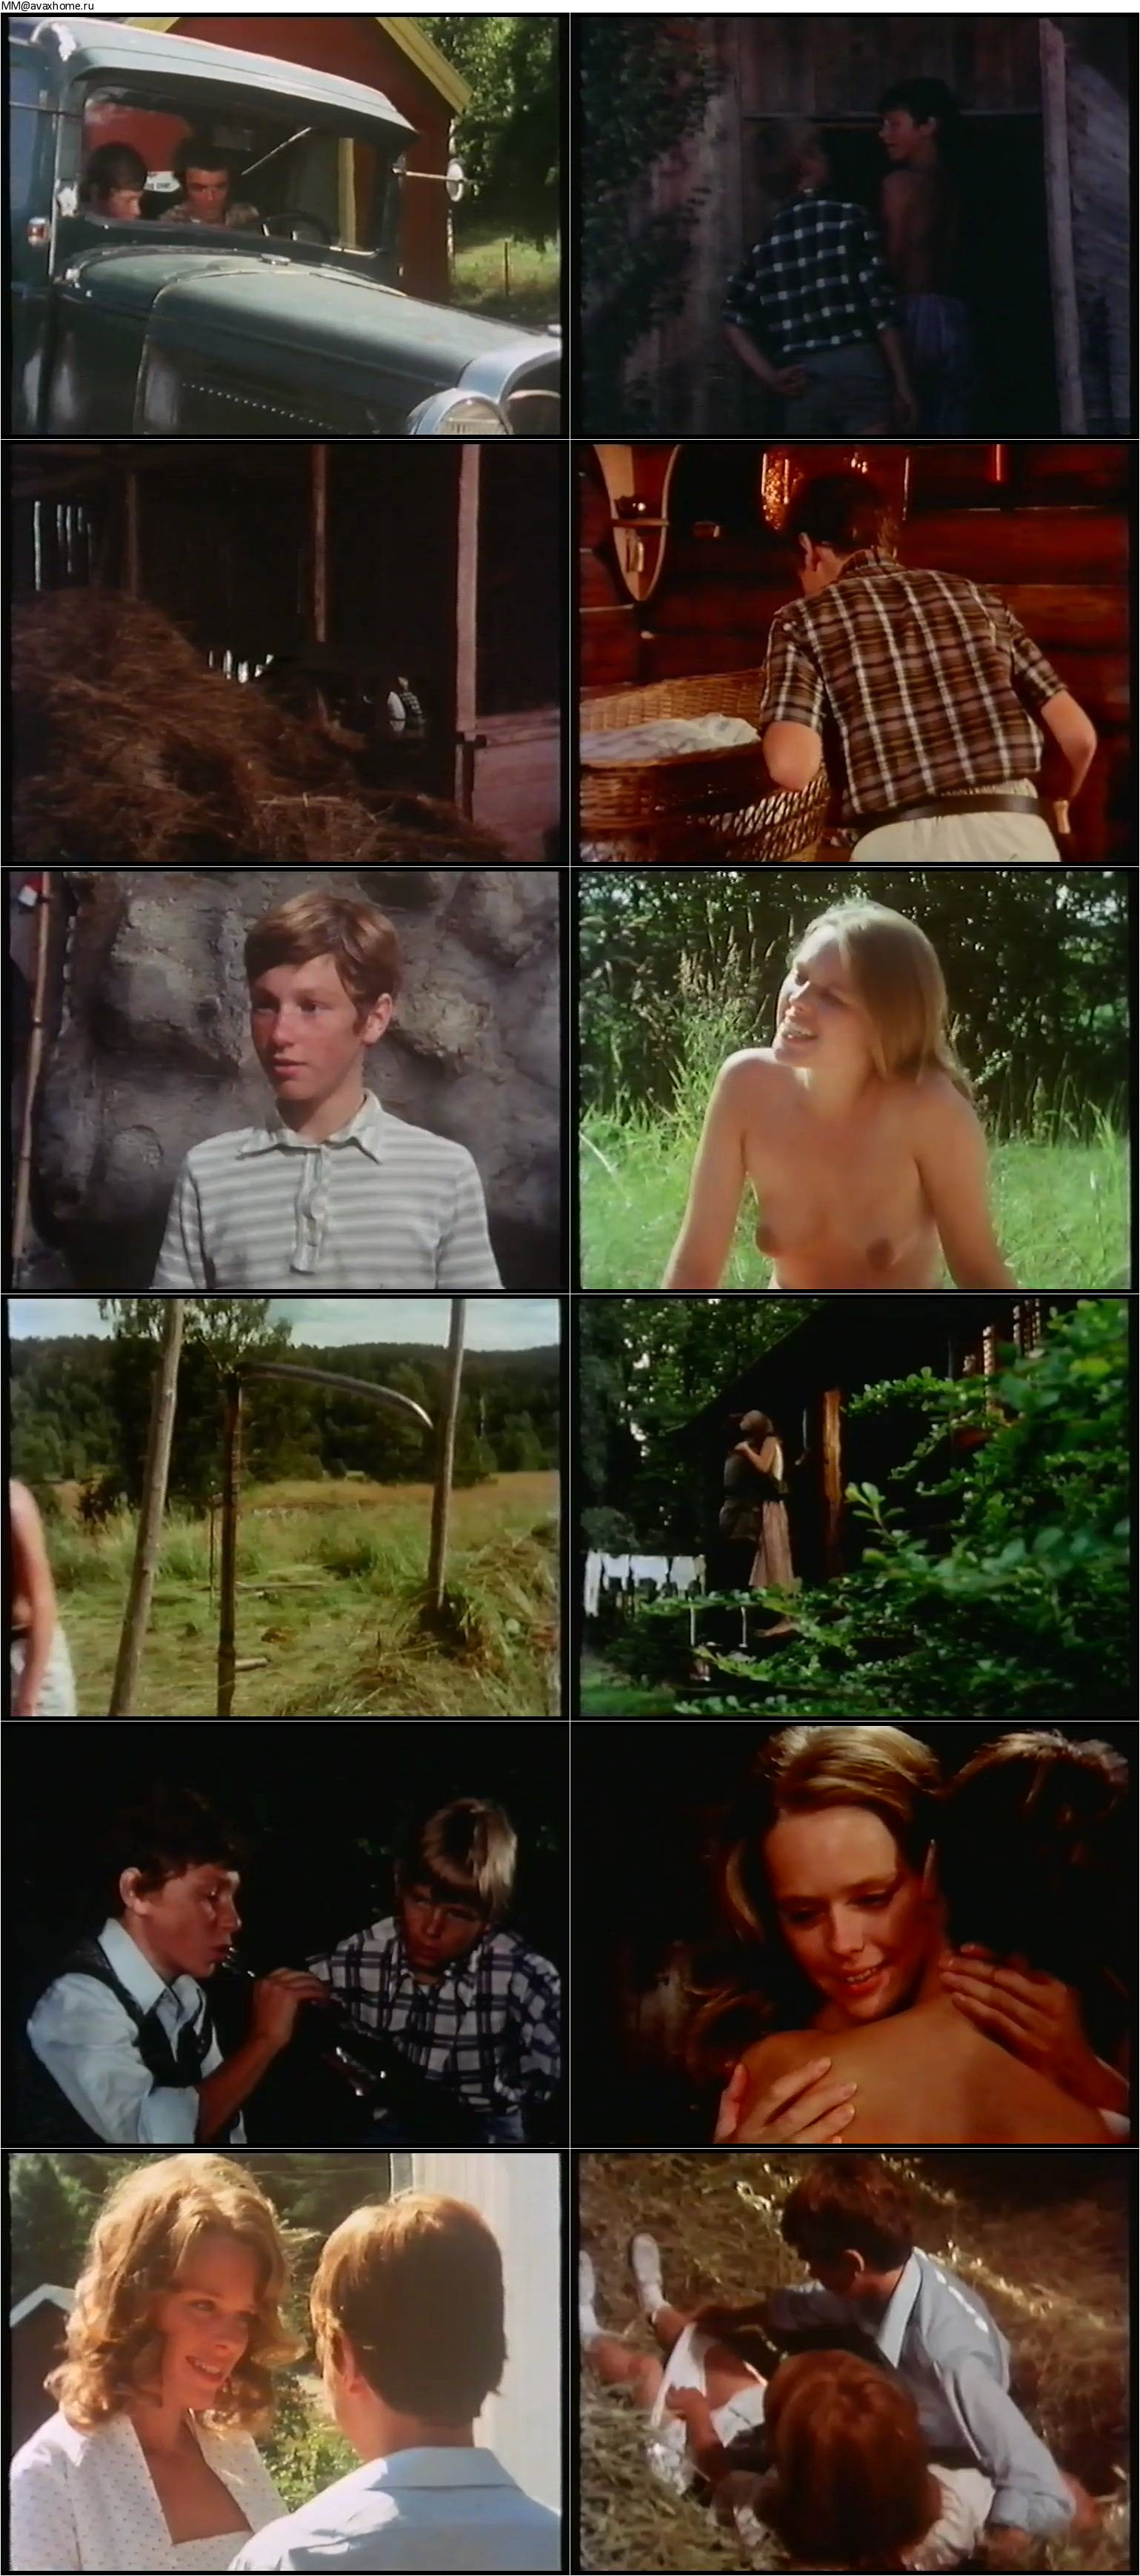 The Summer I Turned 15 (1976) Den sommeren jeg fylte 15